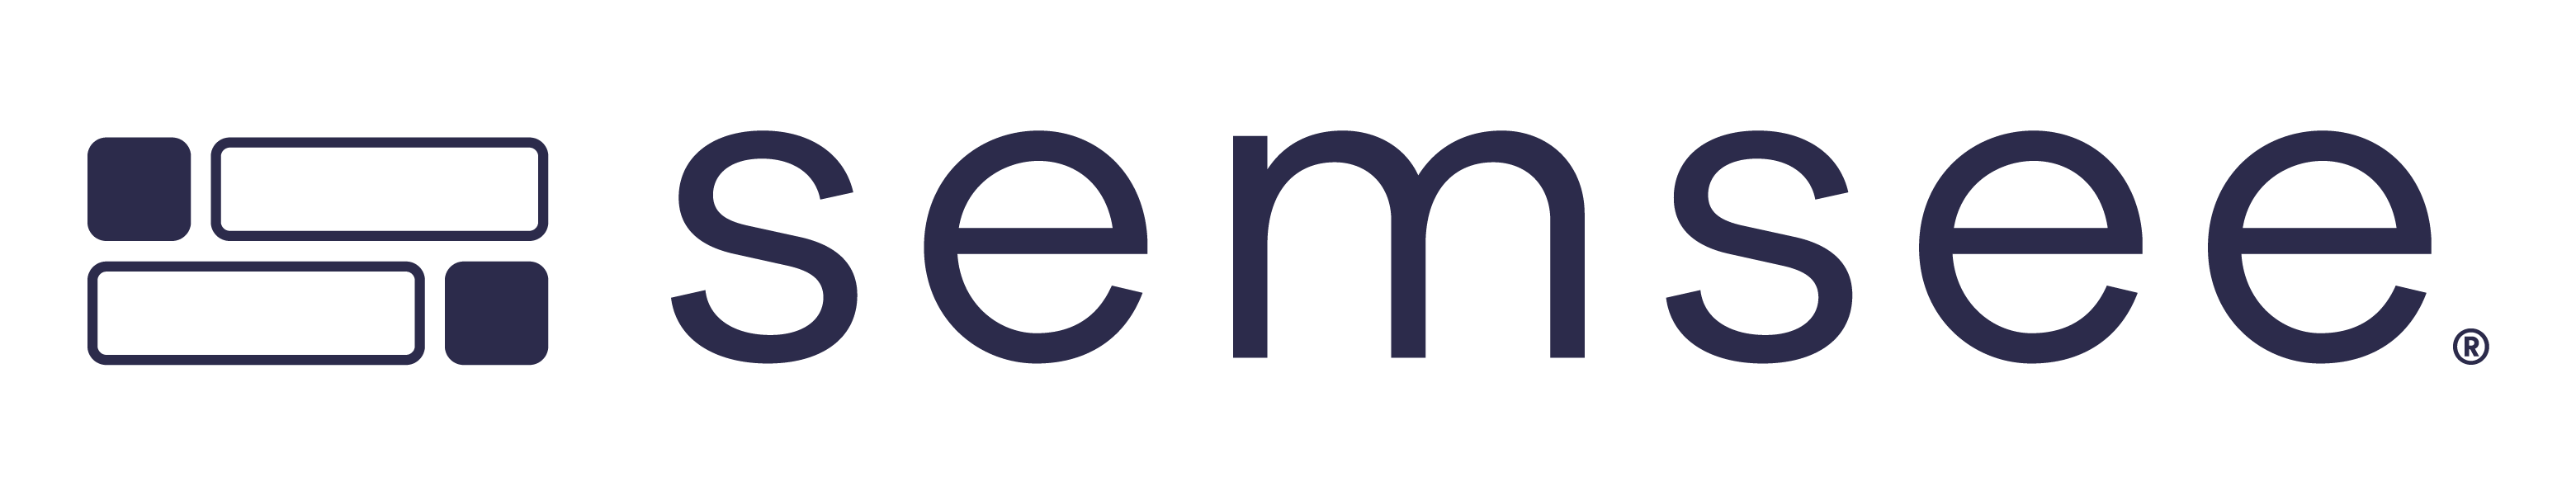 Semsee Logo